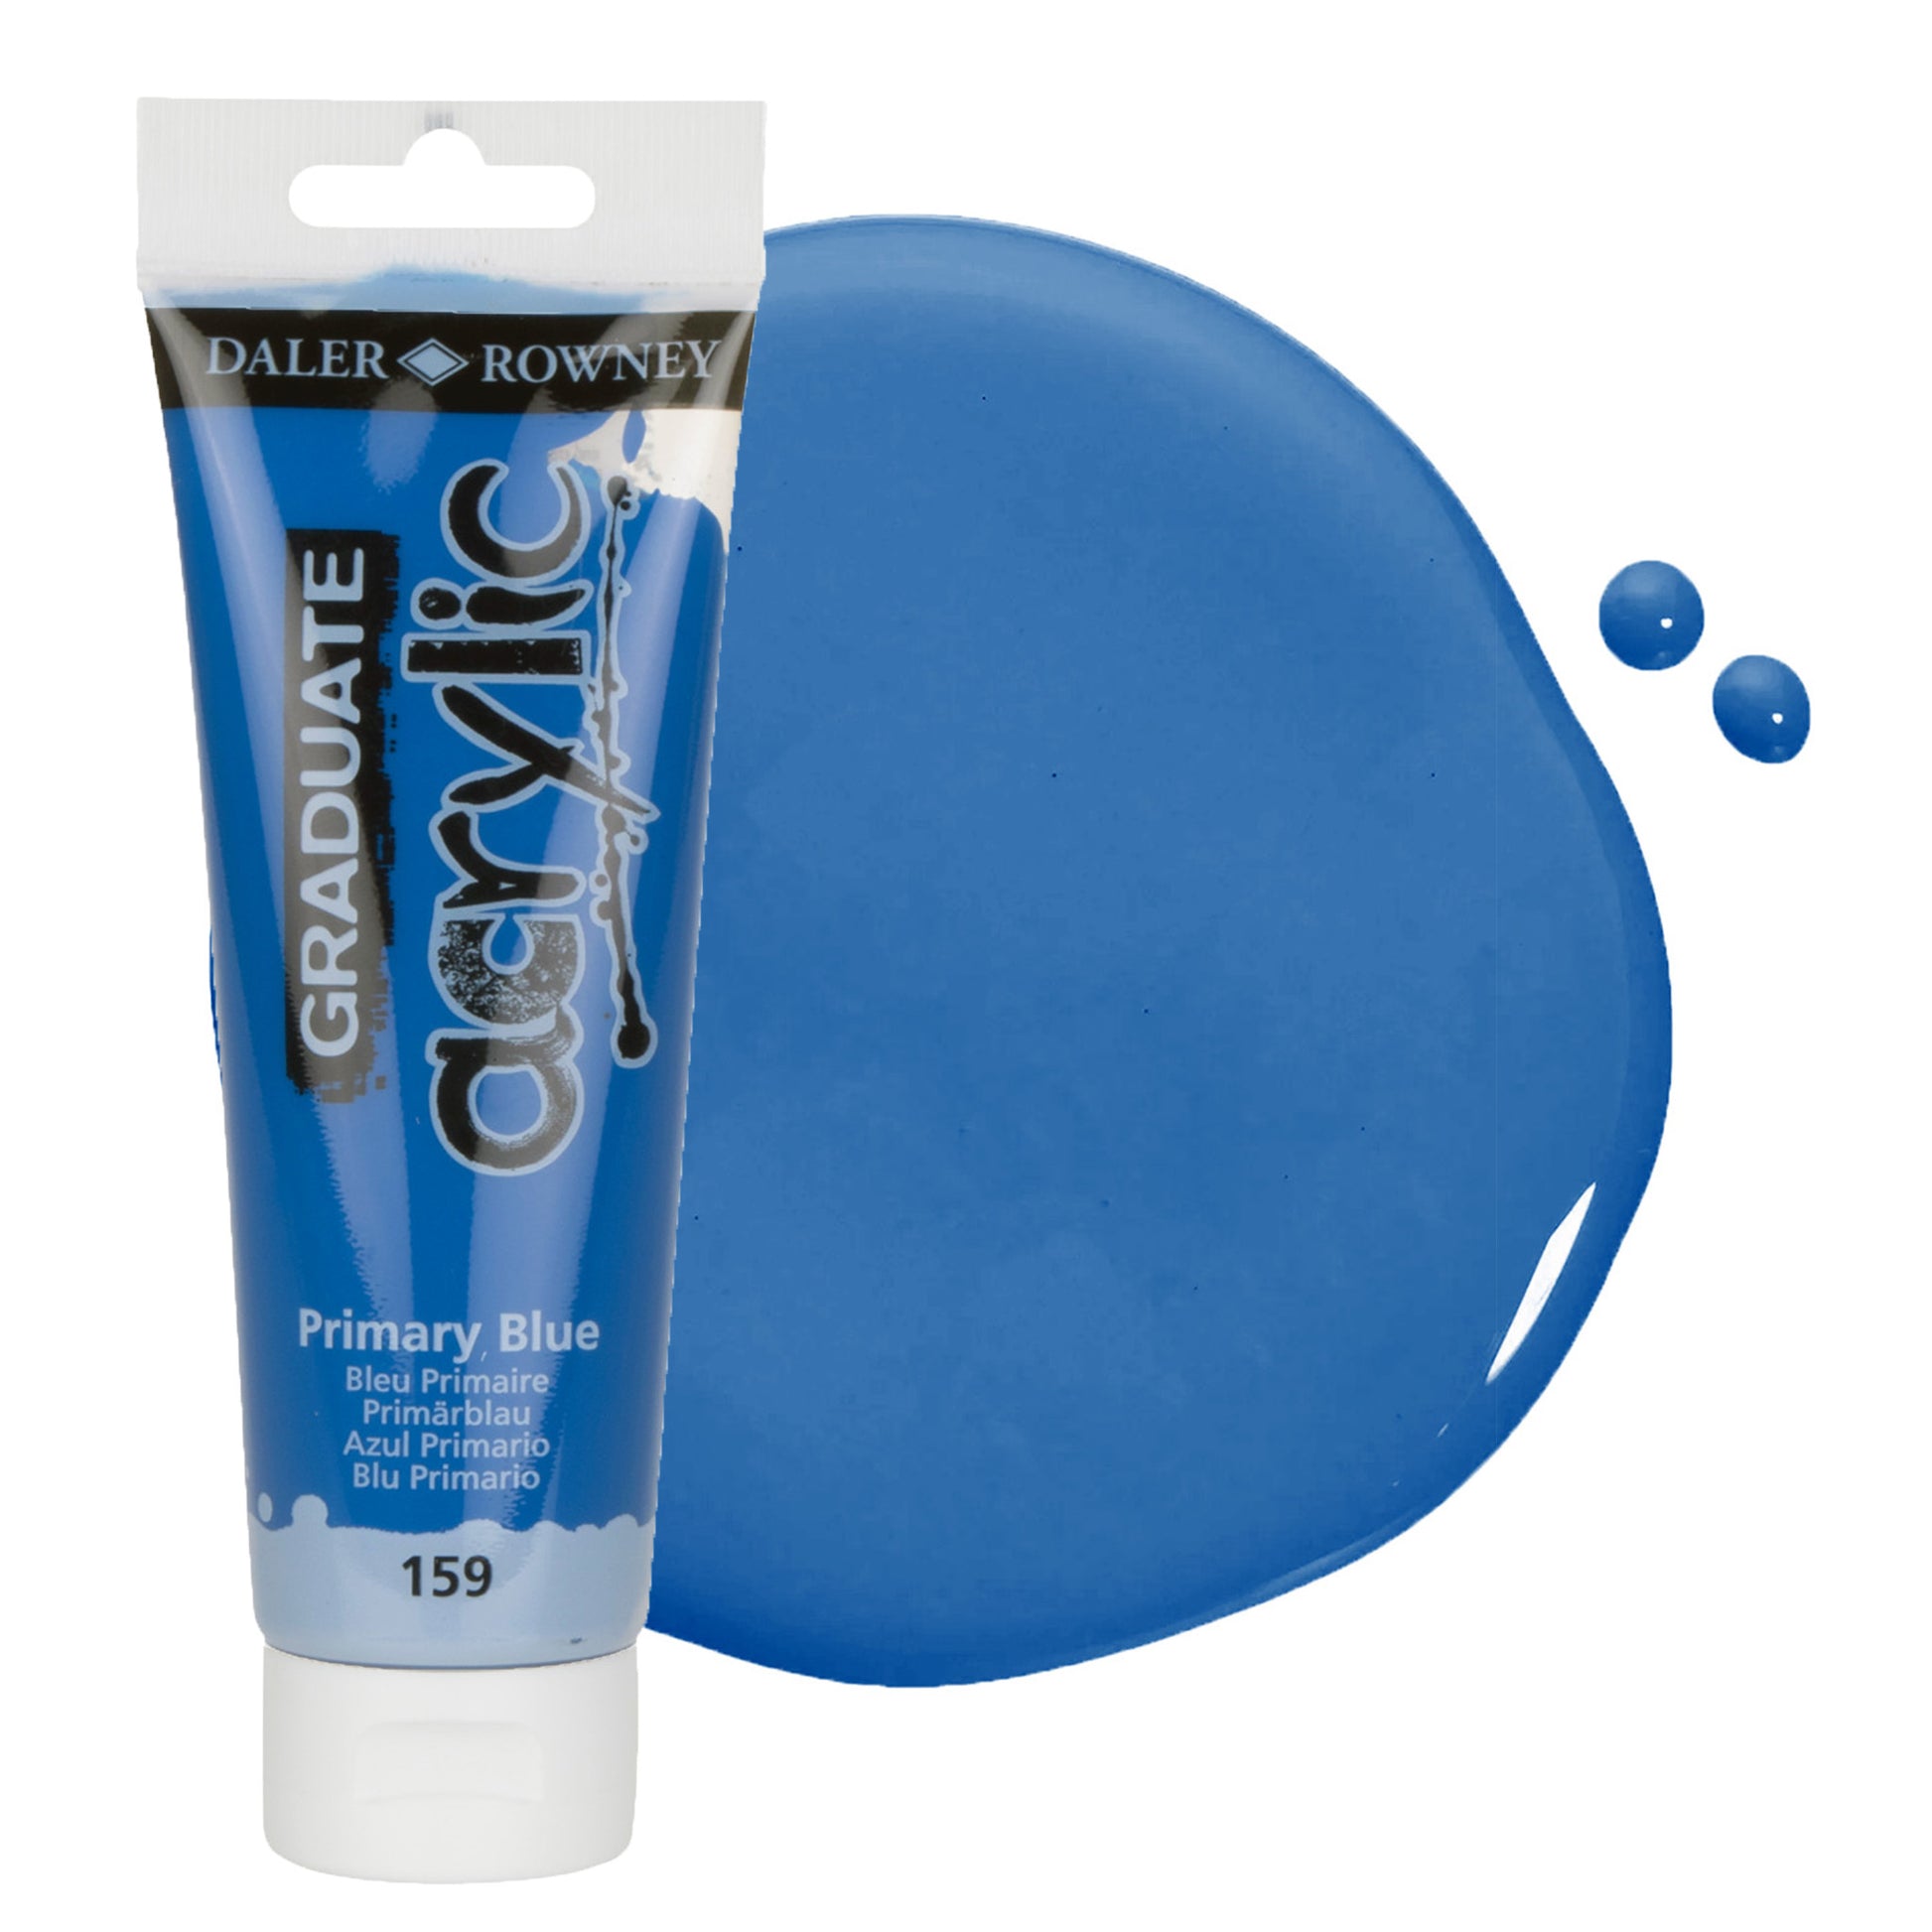 Daler & Rowney beginner's primary blue acrylic paint tube